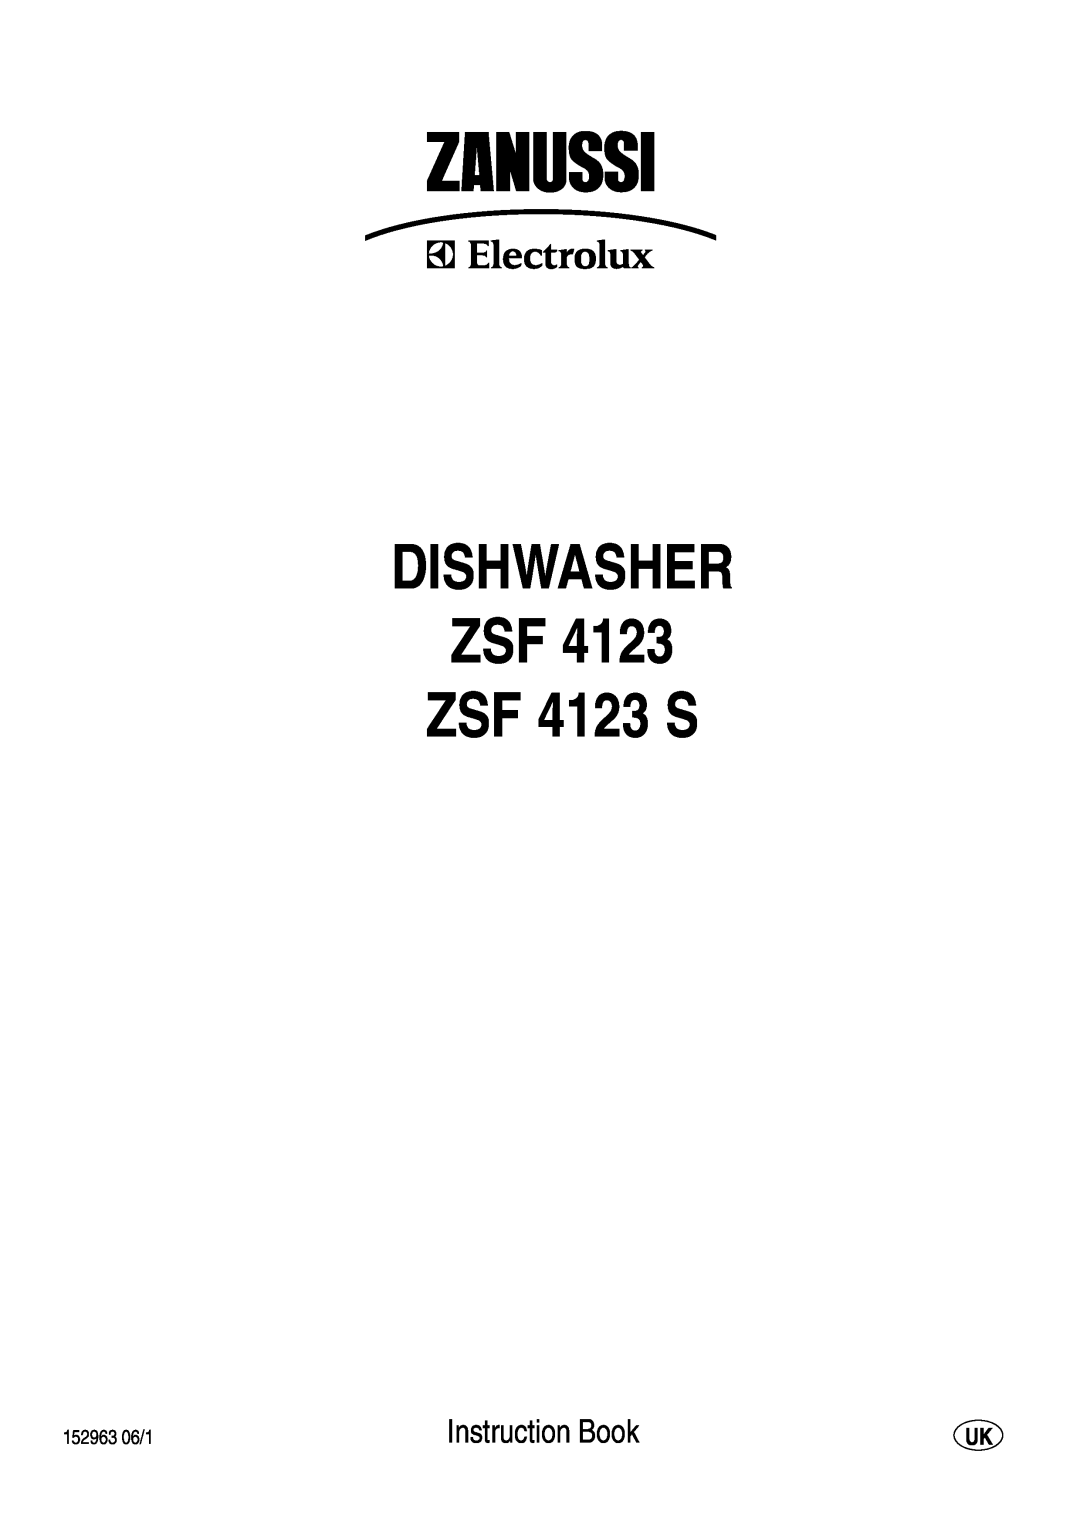 Zanussi manual DISHWASHER ZSF ZSF 4123 S, Instruction Book, 152963 06/1 